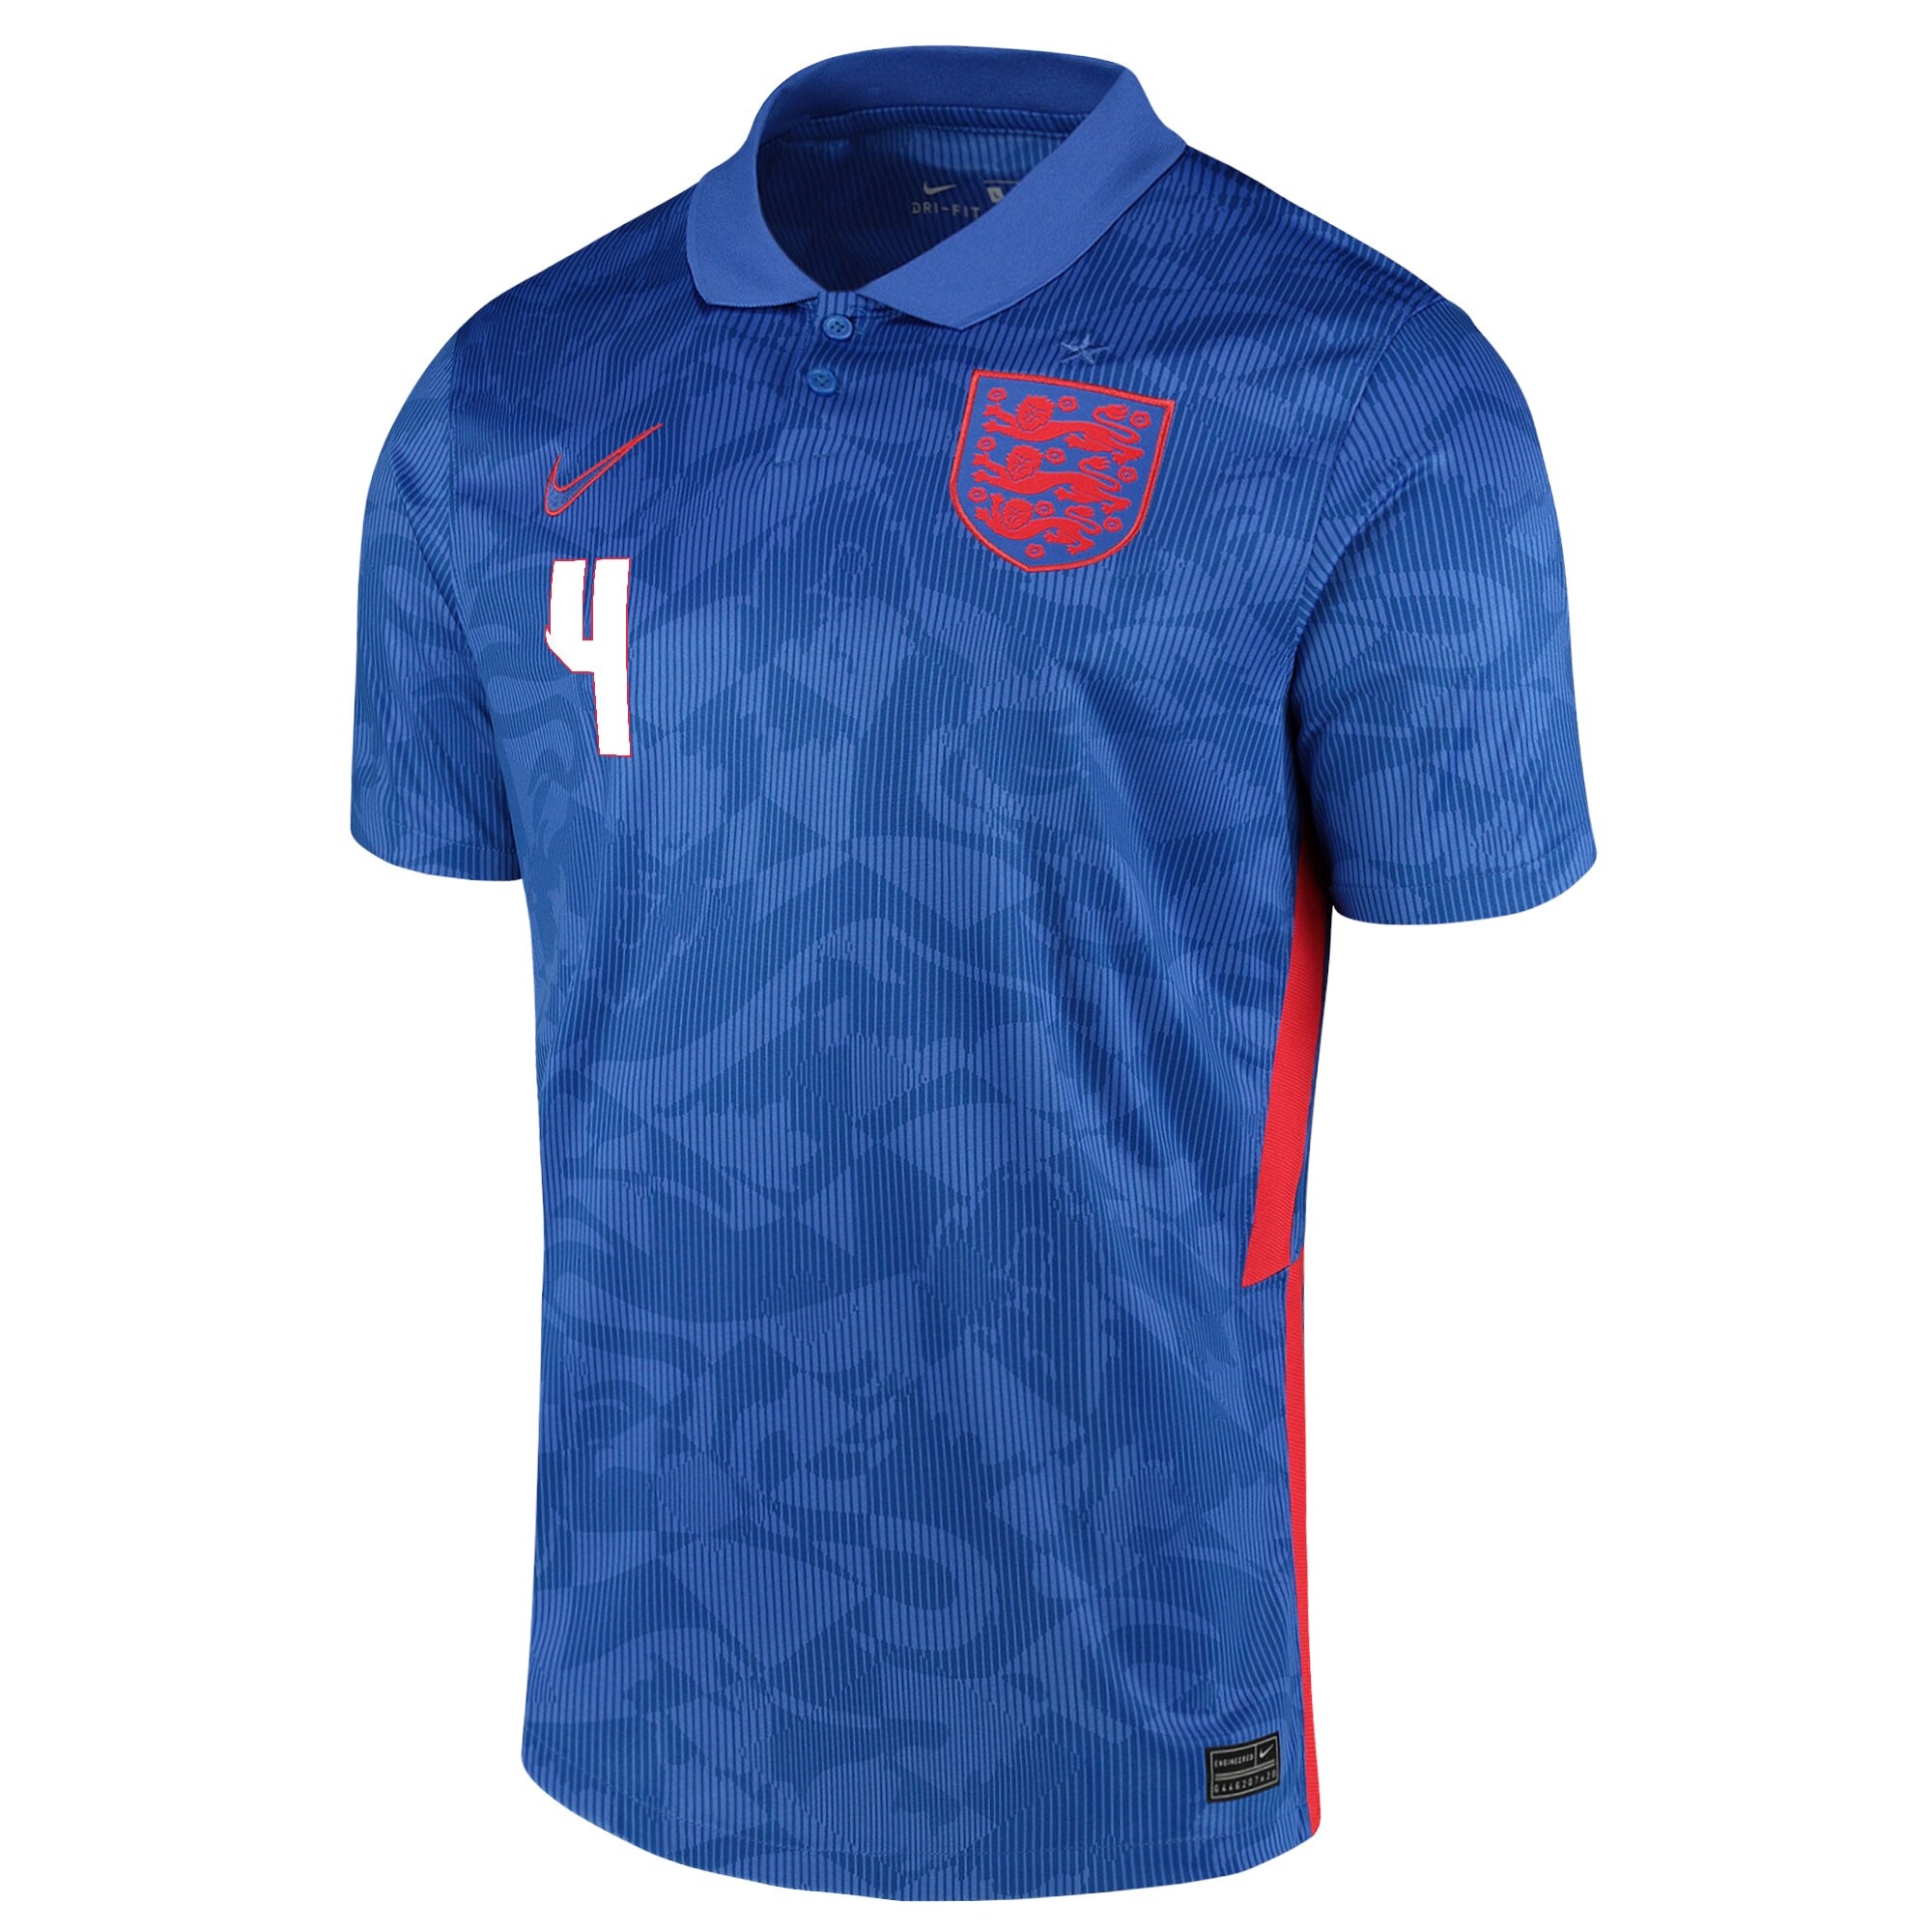 England Away Stadium Shirt 2020-22 with Rice 4 printing